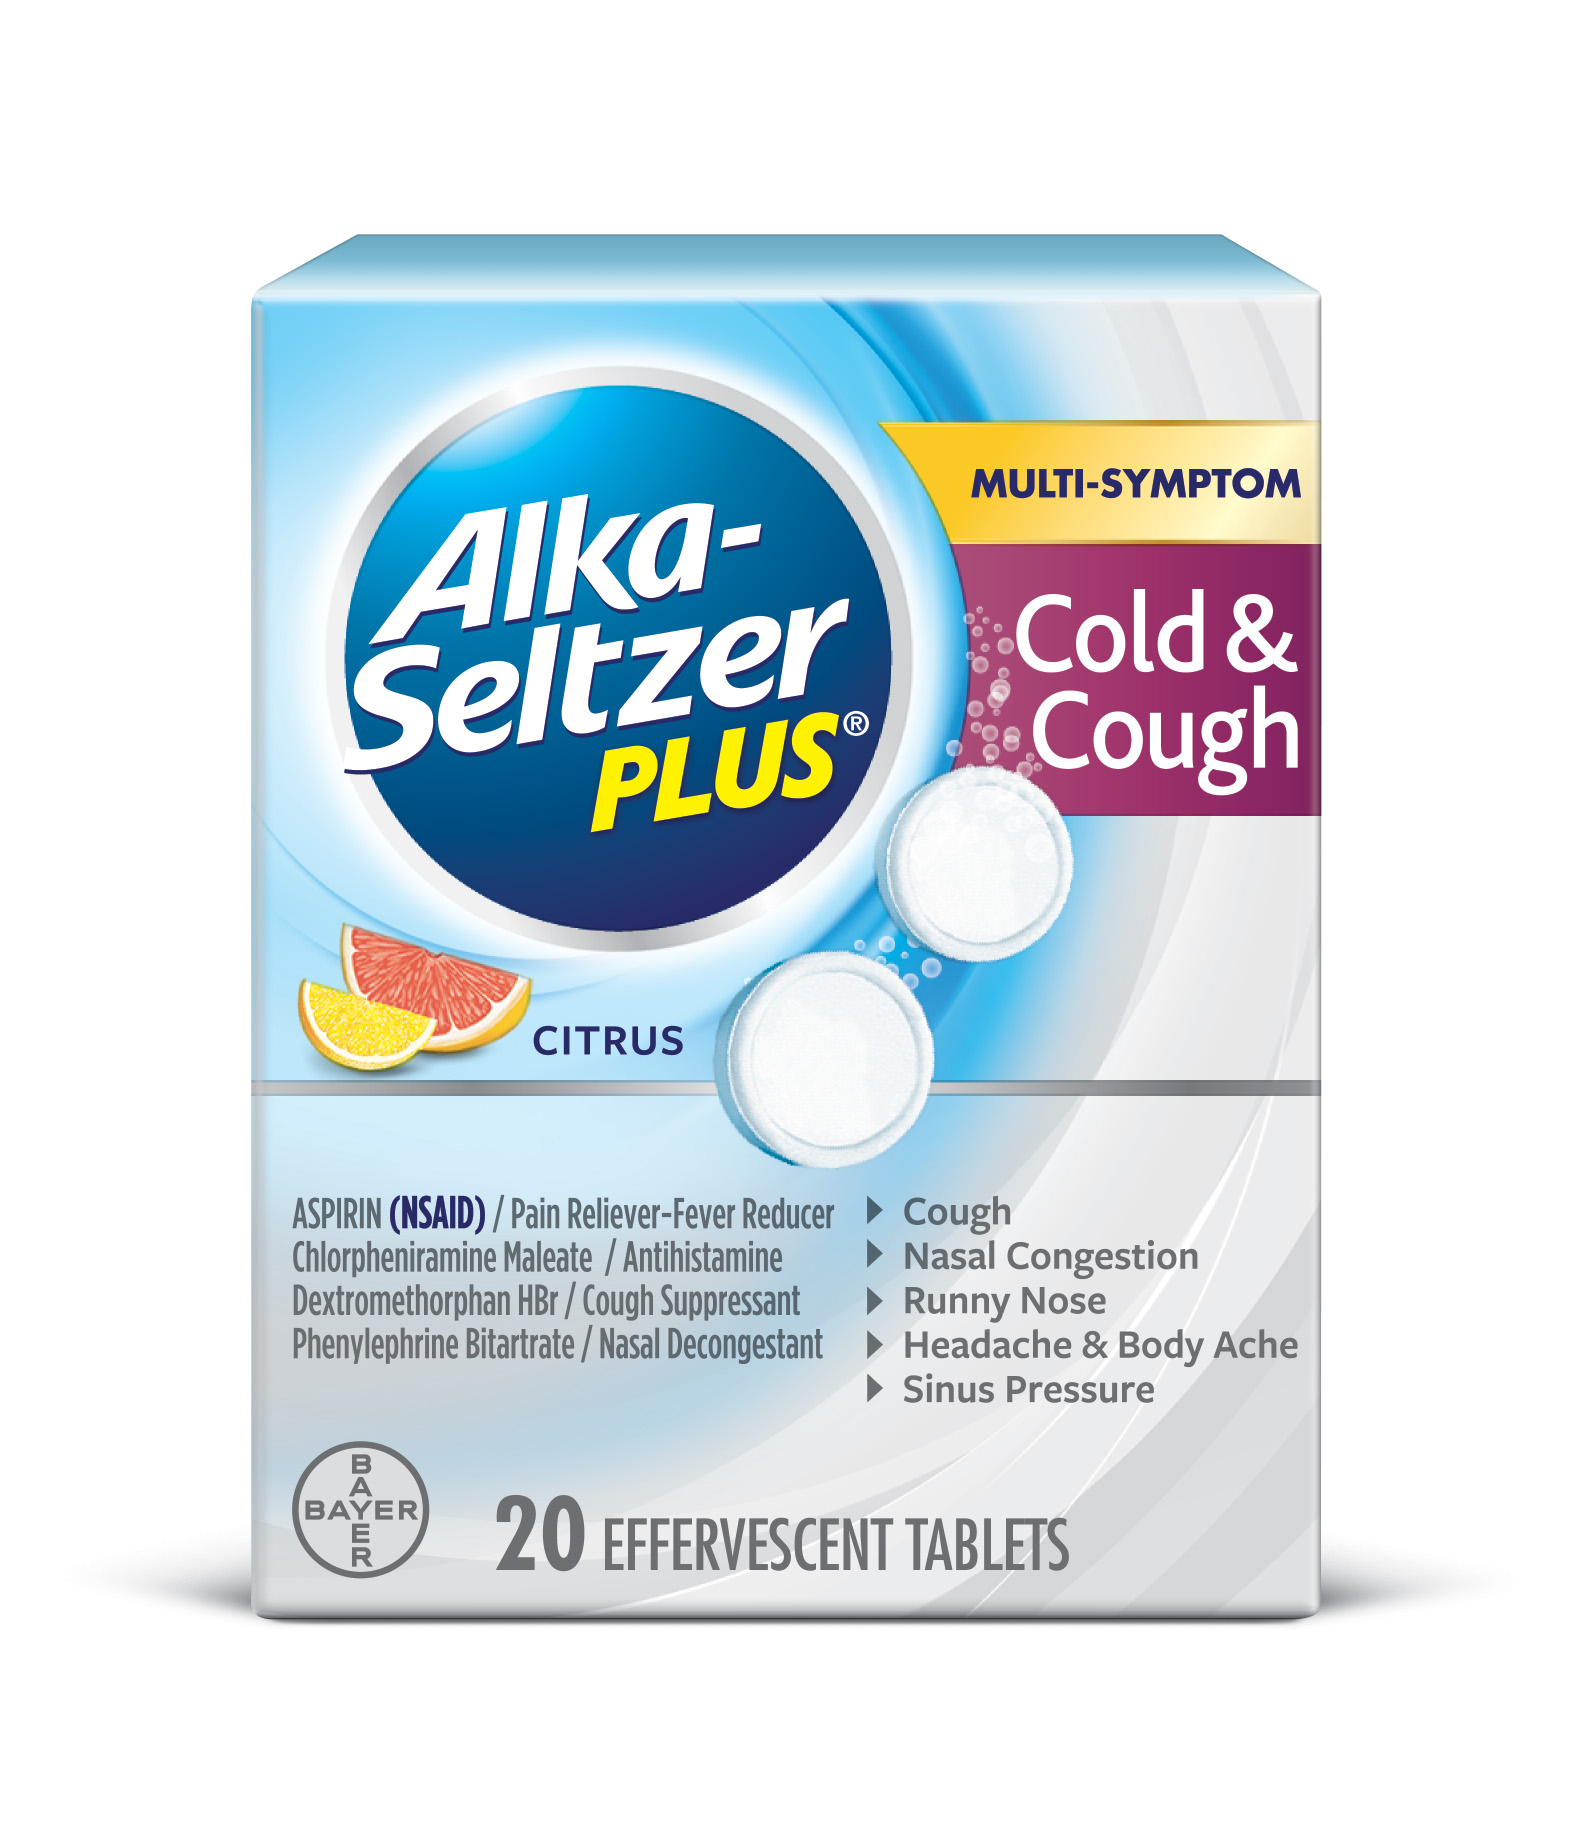 Alka-Seltzer  Plus Multi-Symptom Cold & Cough Effervescent Tablets 20 ct Box